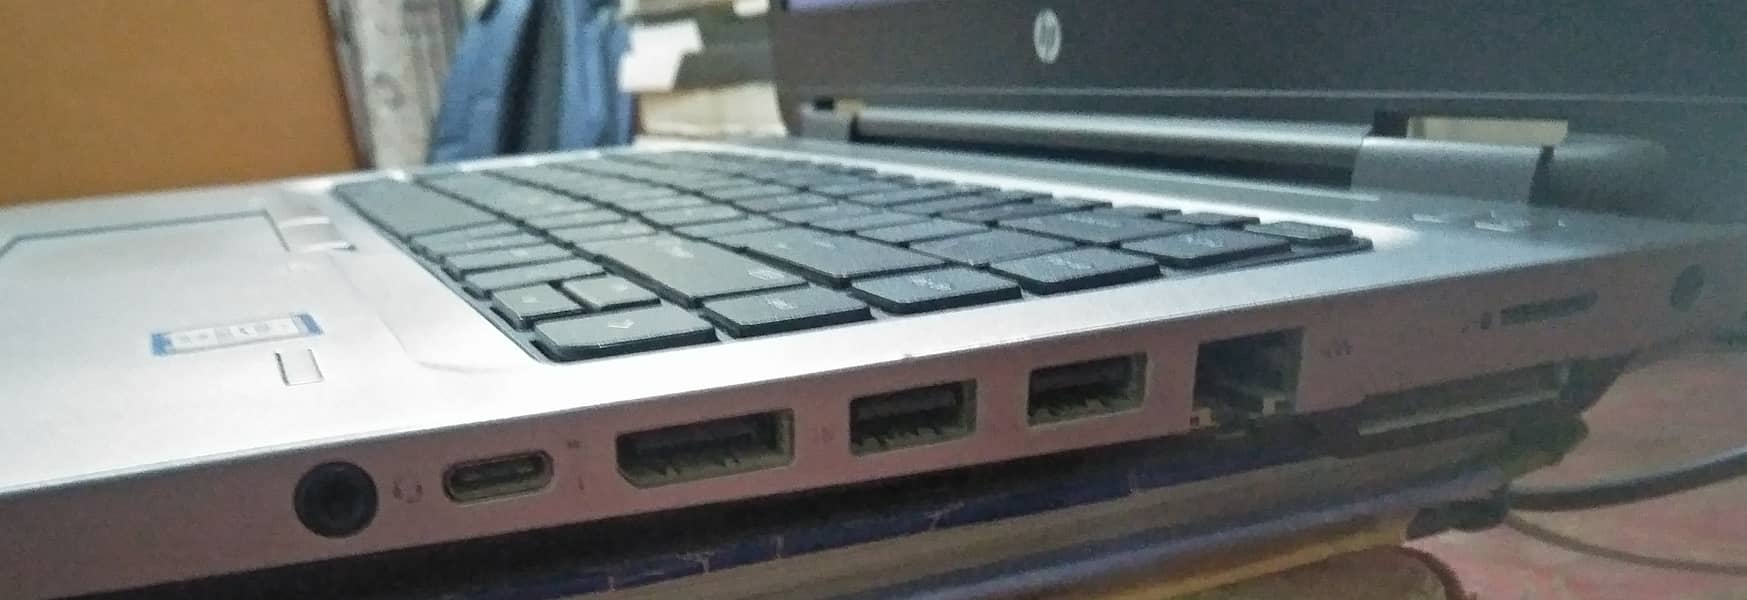 HP Laptop Core i5 6th Generation 6